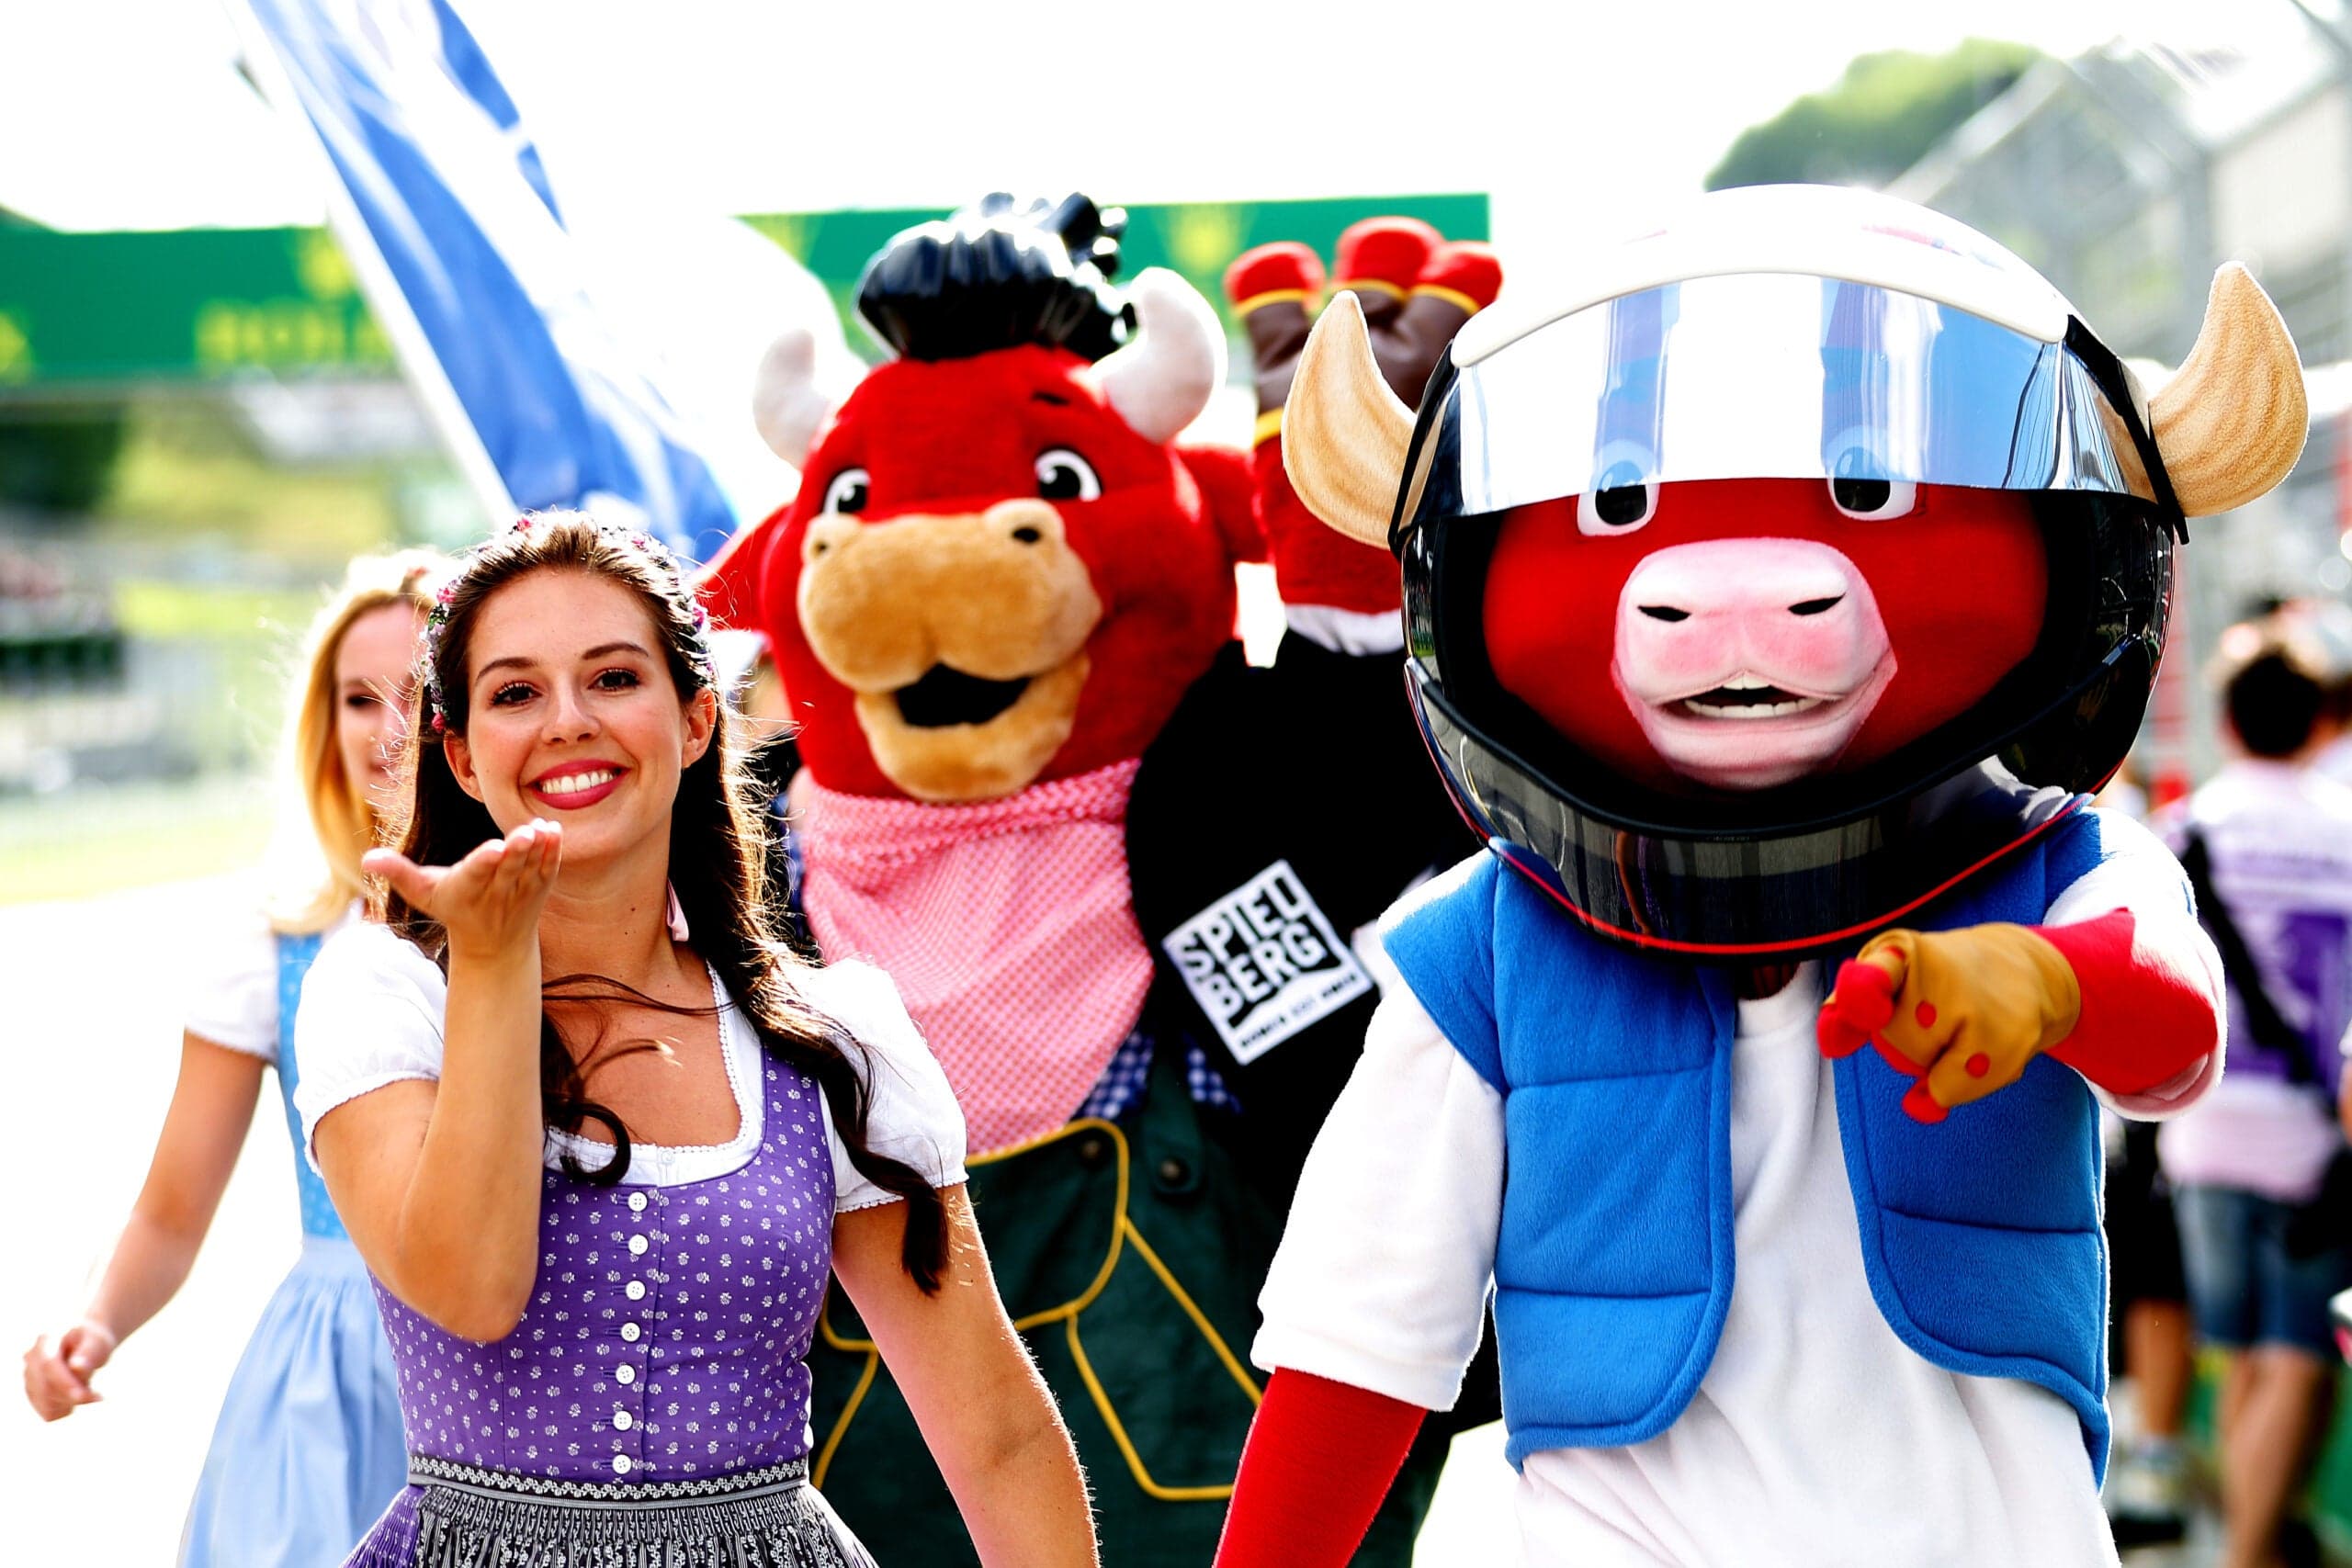 Models and mascots ahead of the Austrian Grand Prix